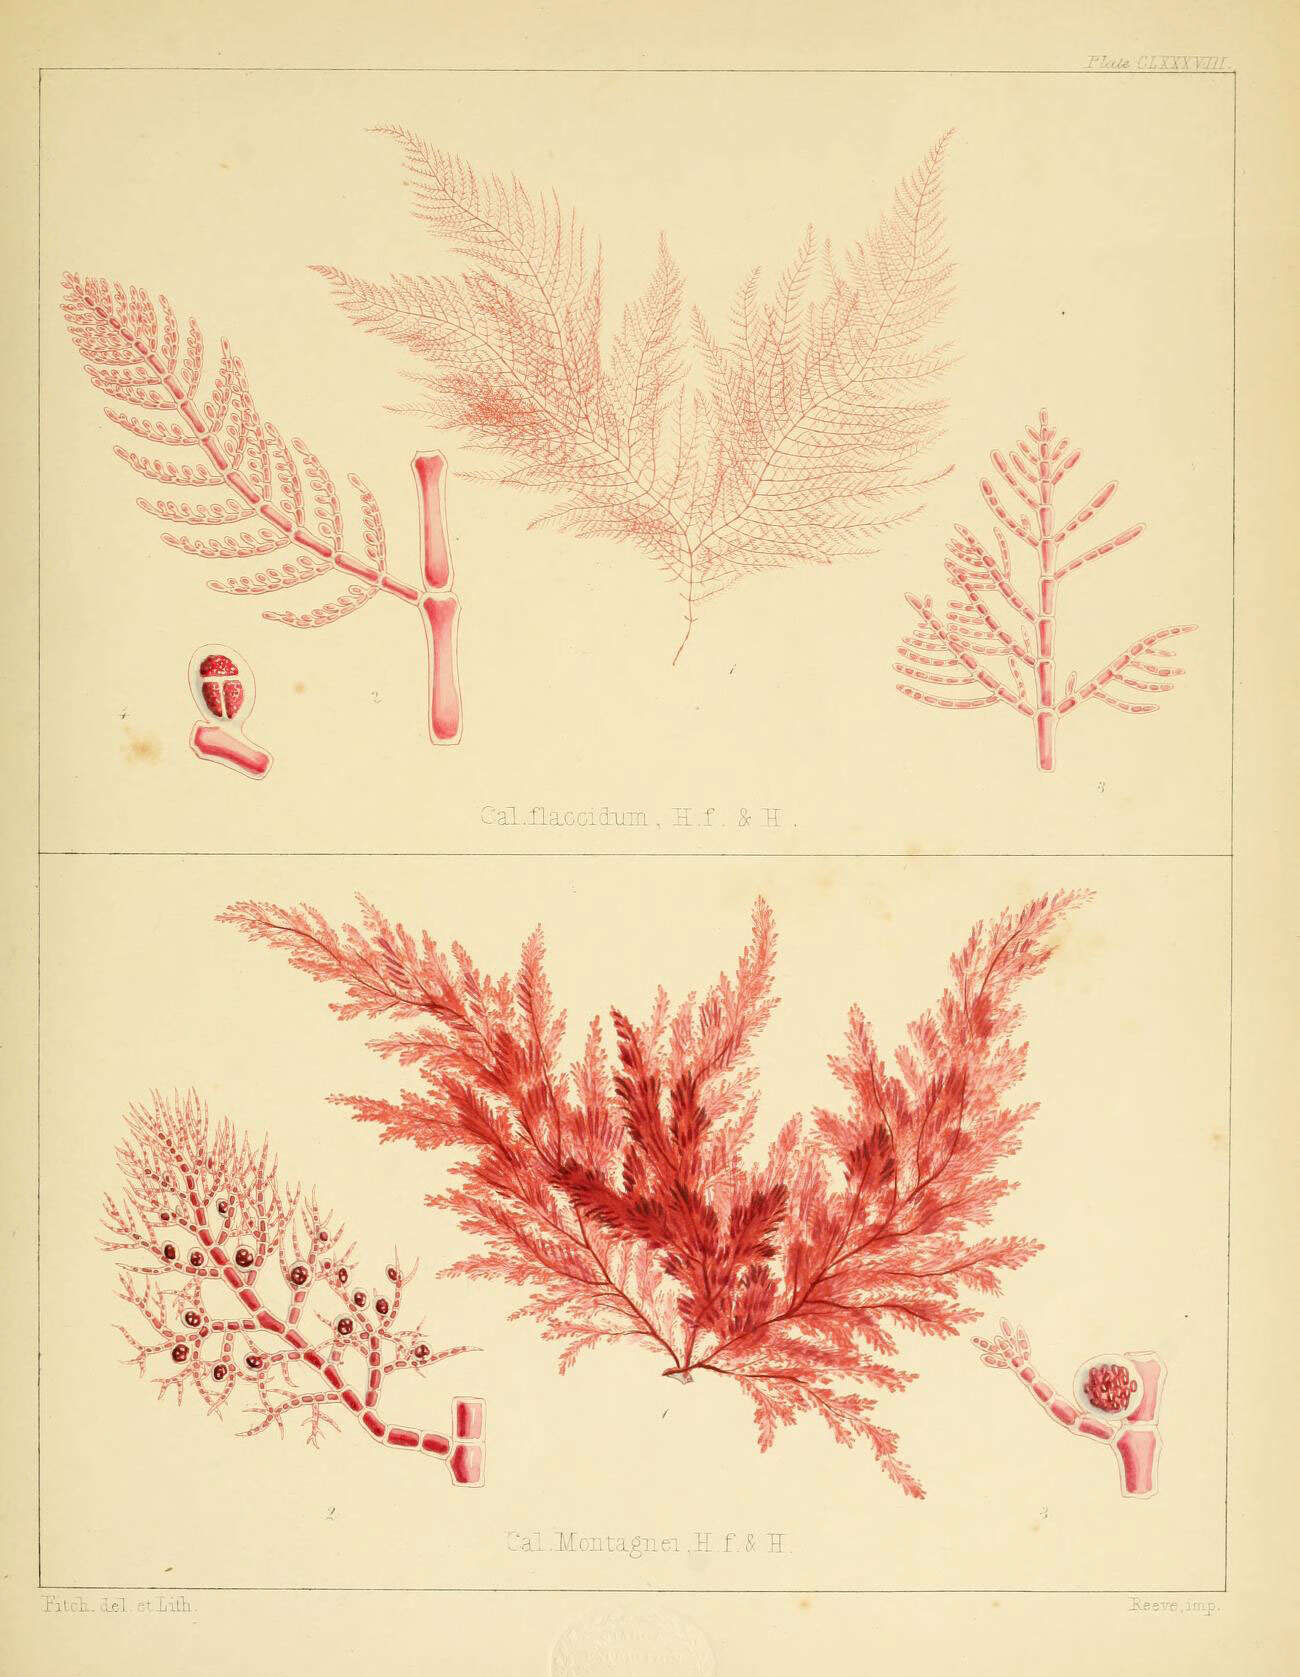 Image of Callithamnion montagnei J. D. Hooker 1847